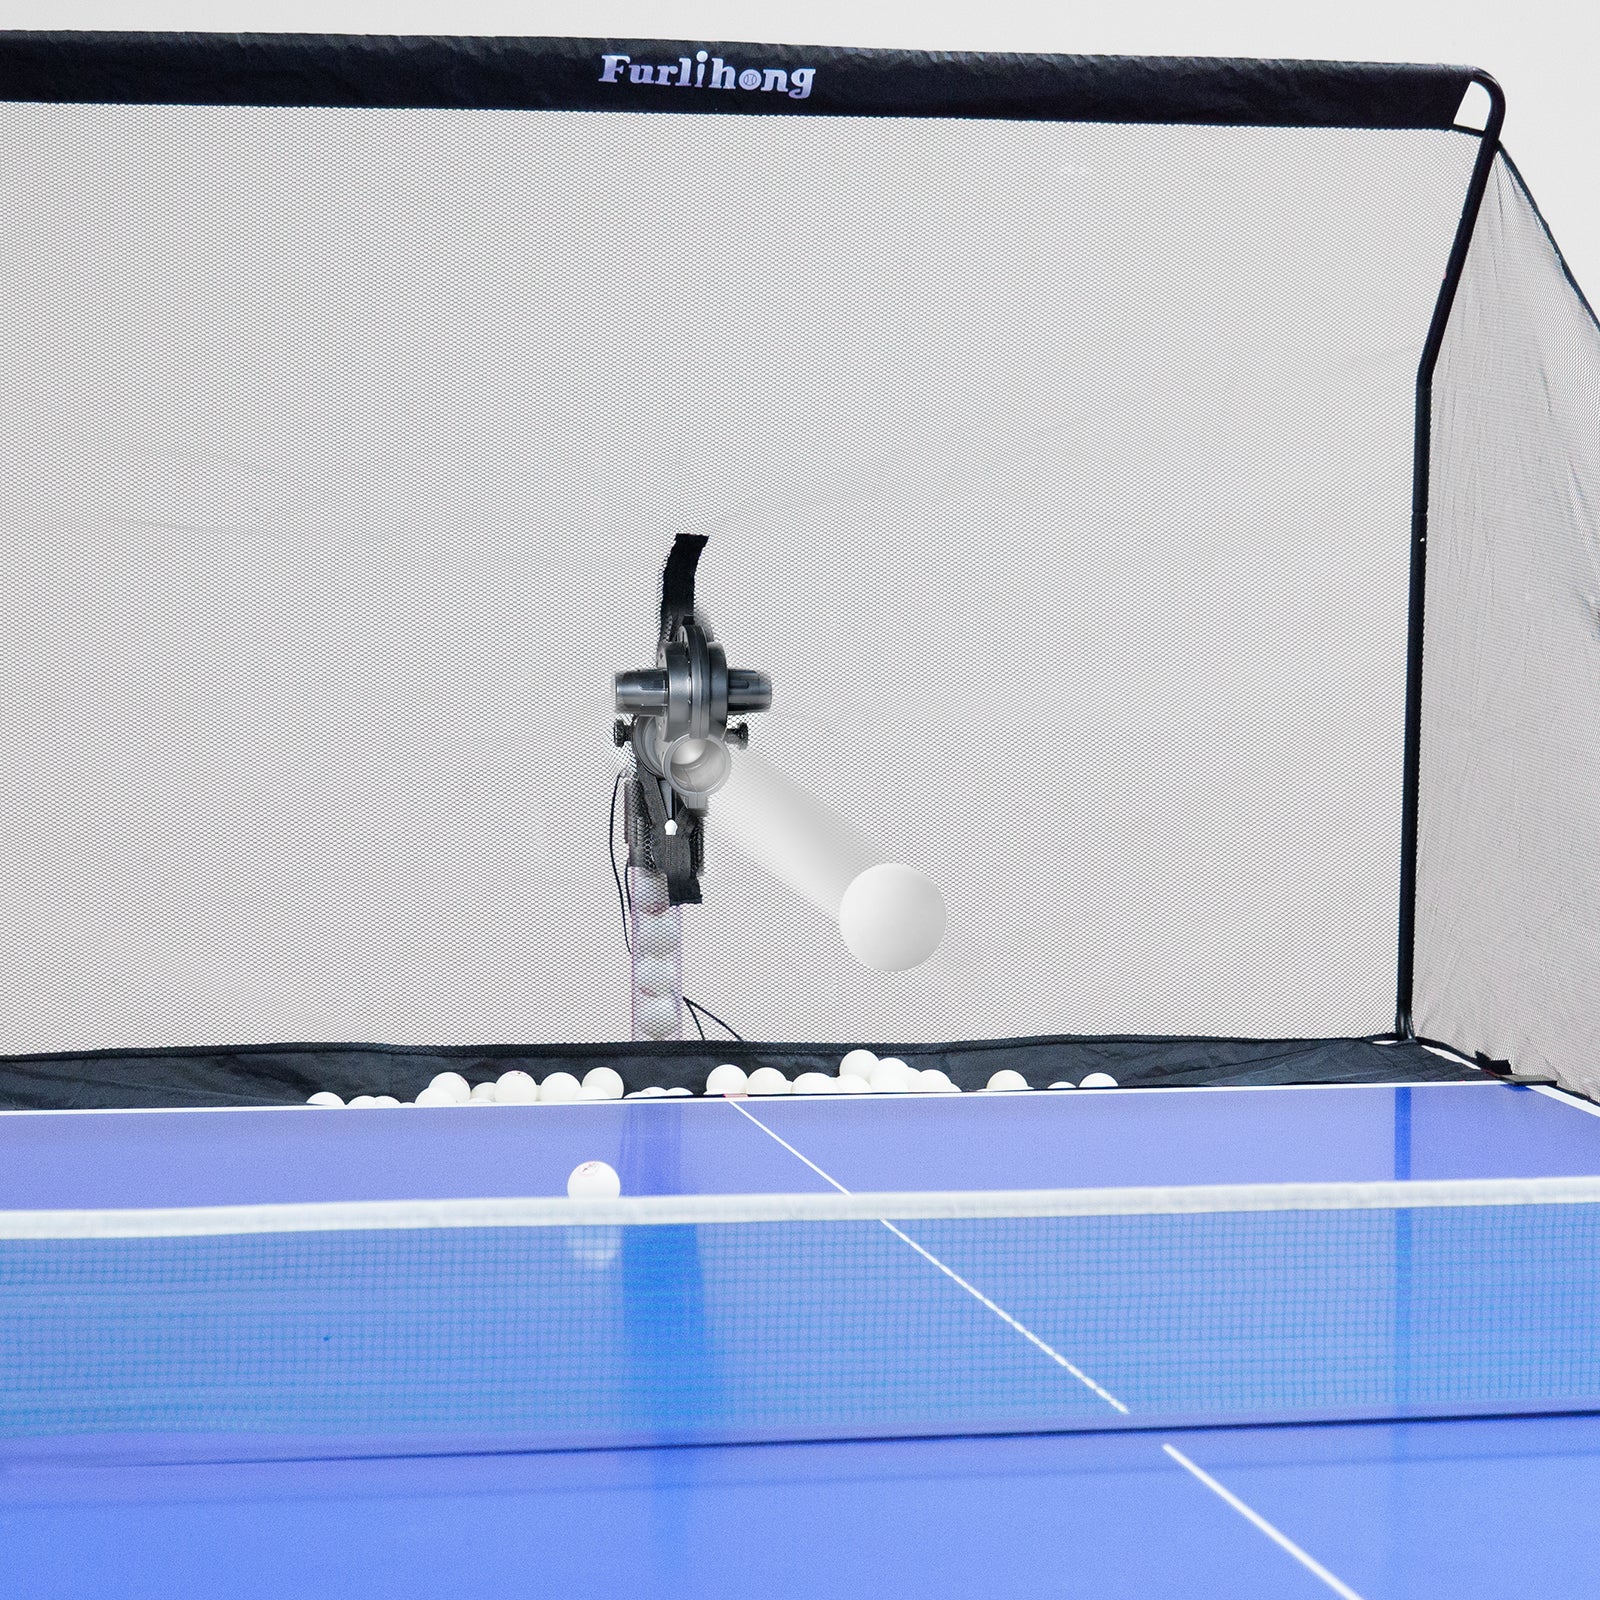 Furlihong 3804BH Table Tennis Robot with Ball Recycling Net